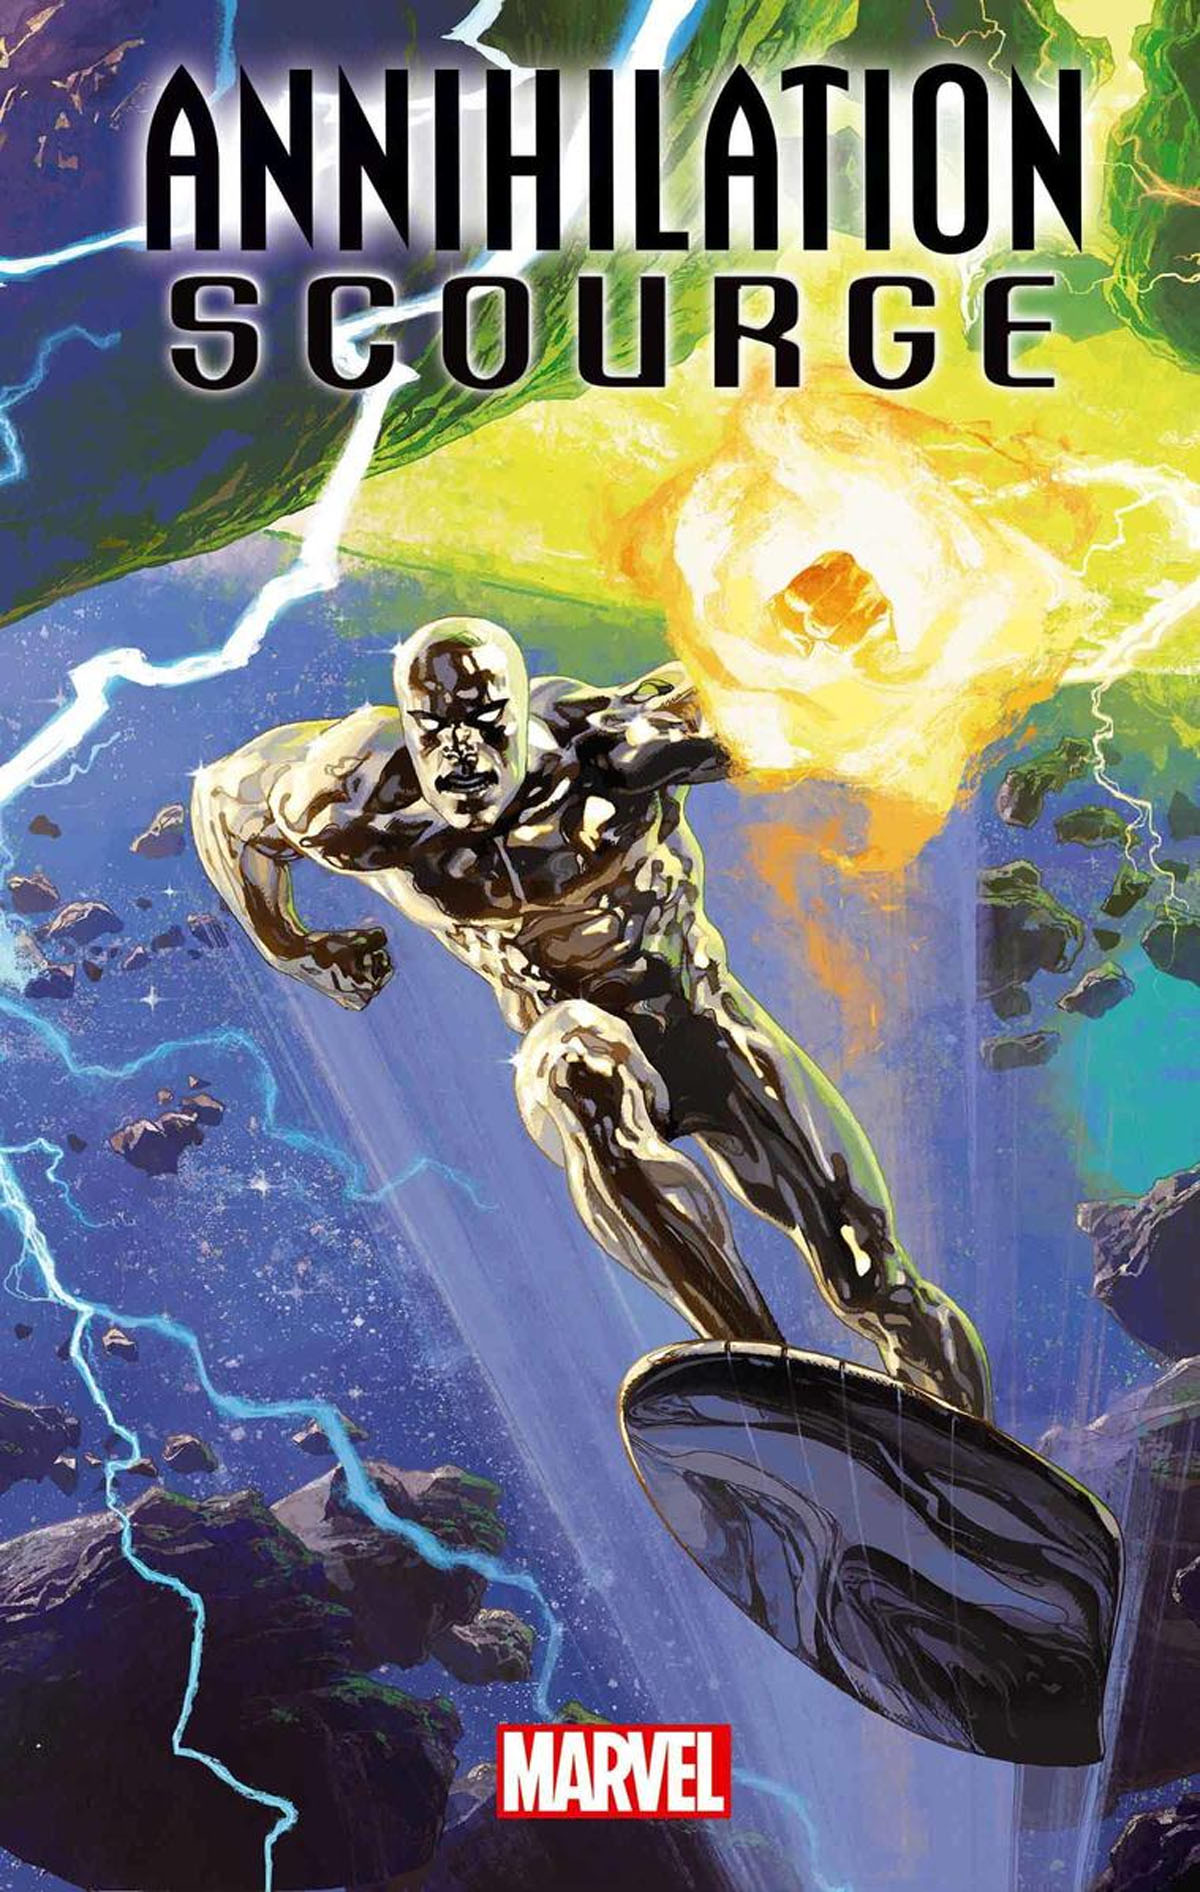 Annihilation - Scourge: Silver Surfer #1 cover